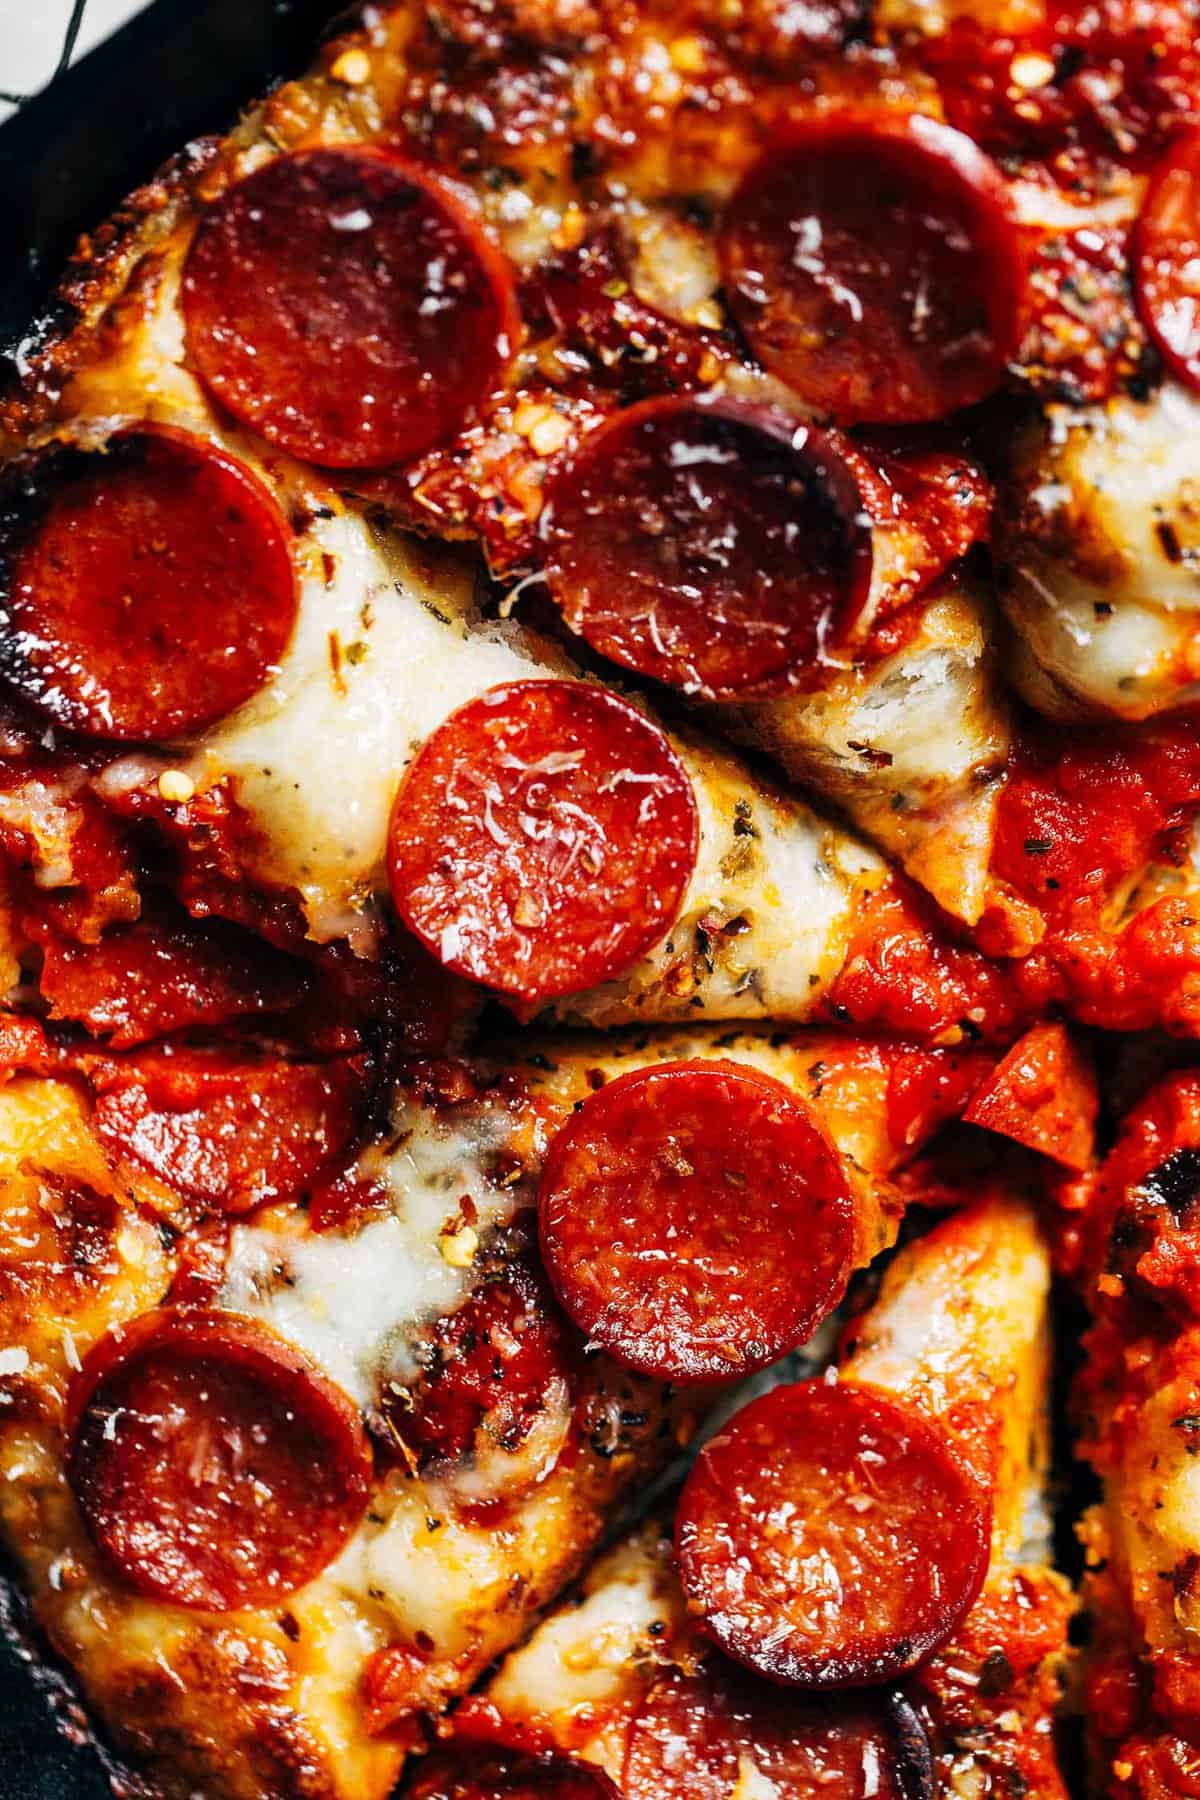 https://butternutbakeryblog.com/wp-content/uploads/2022/02/detroit-style-pizza-pepperoni.jpg